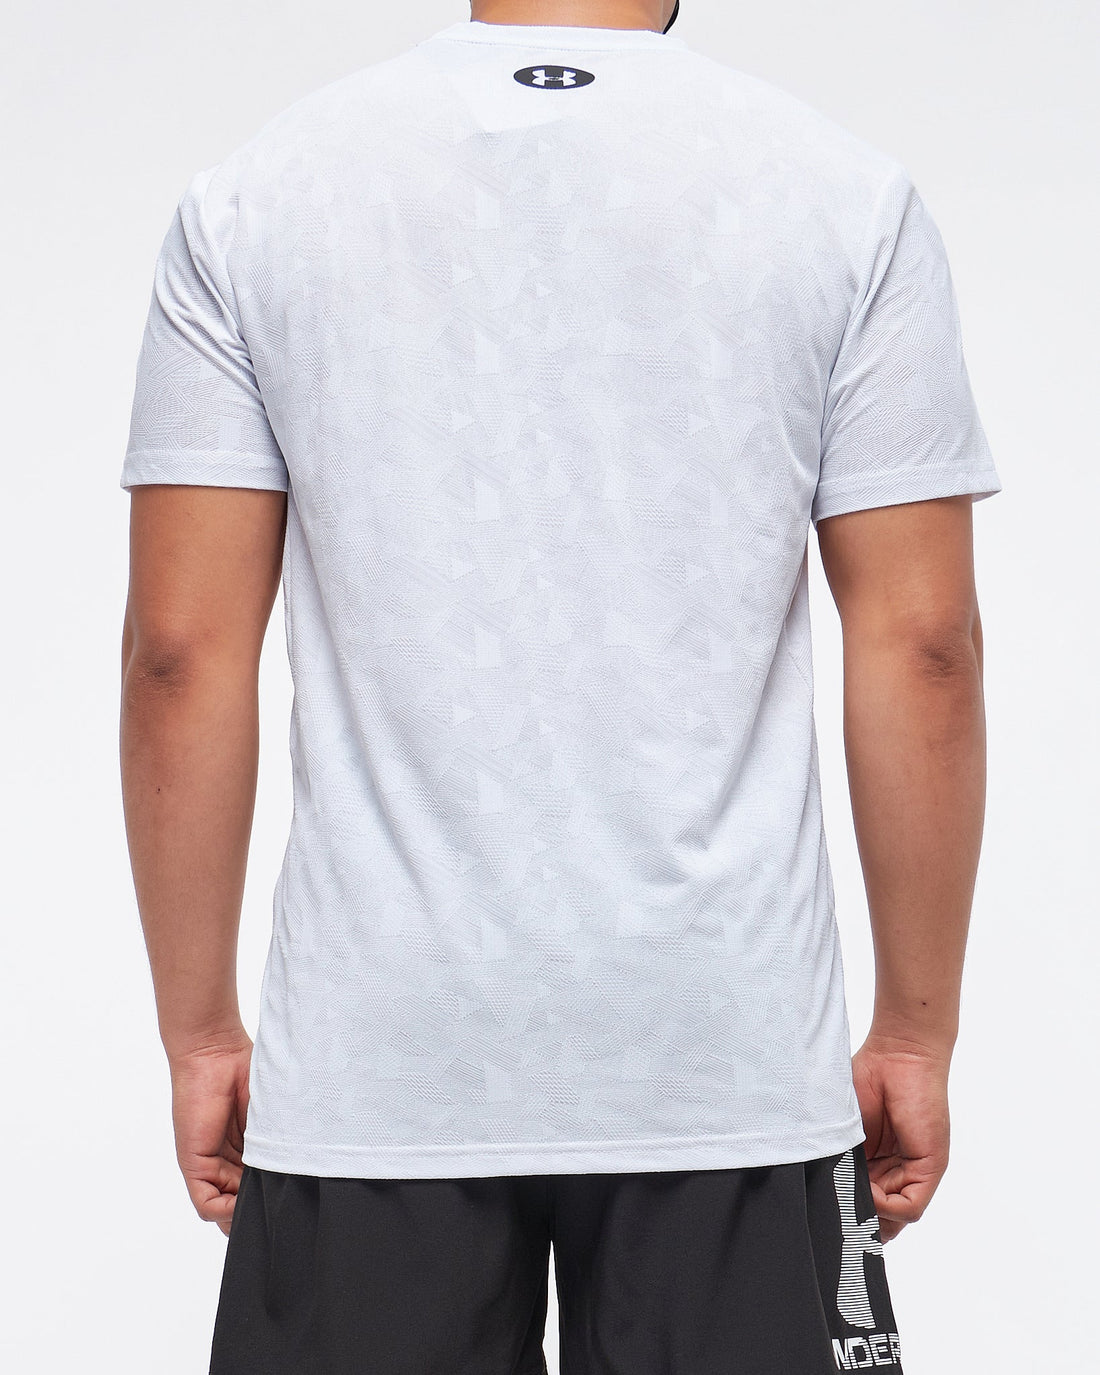 MOI OUTFIT-UA Printed Sport Men T-Shirt 13.50